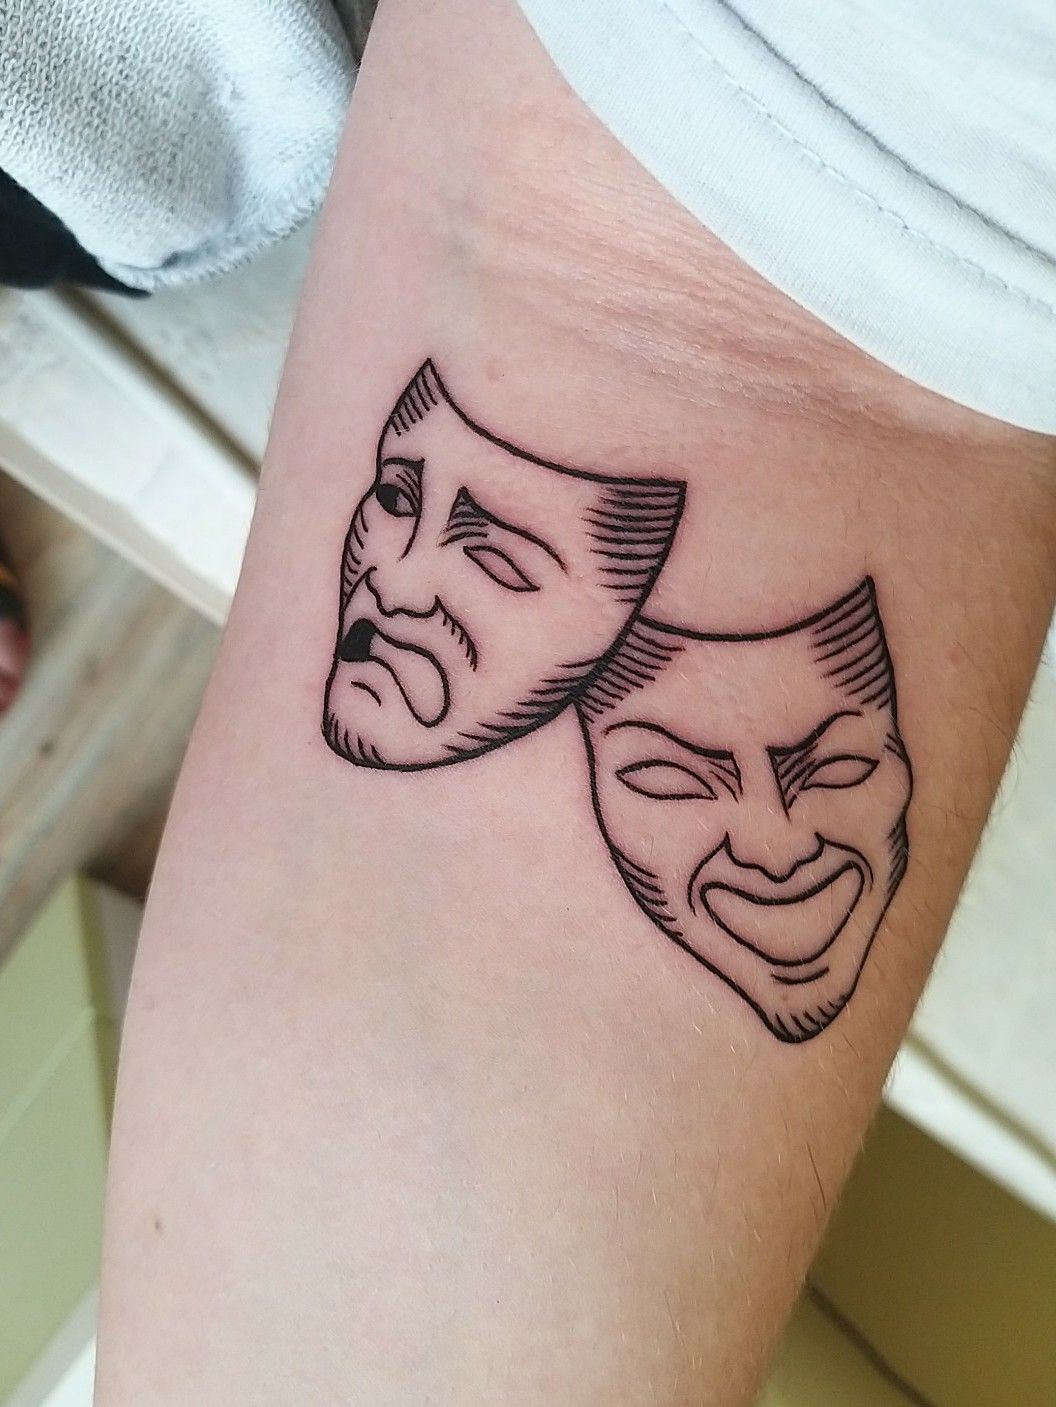 Drama mask tattoo | Small tattoos for guys, Dainty tattoos, Simple tattoos